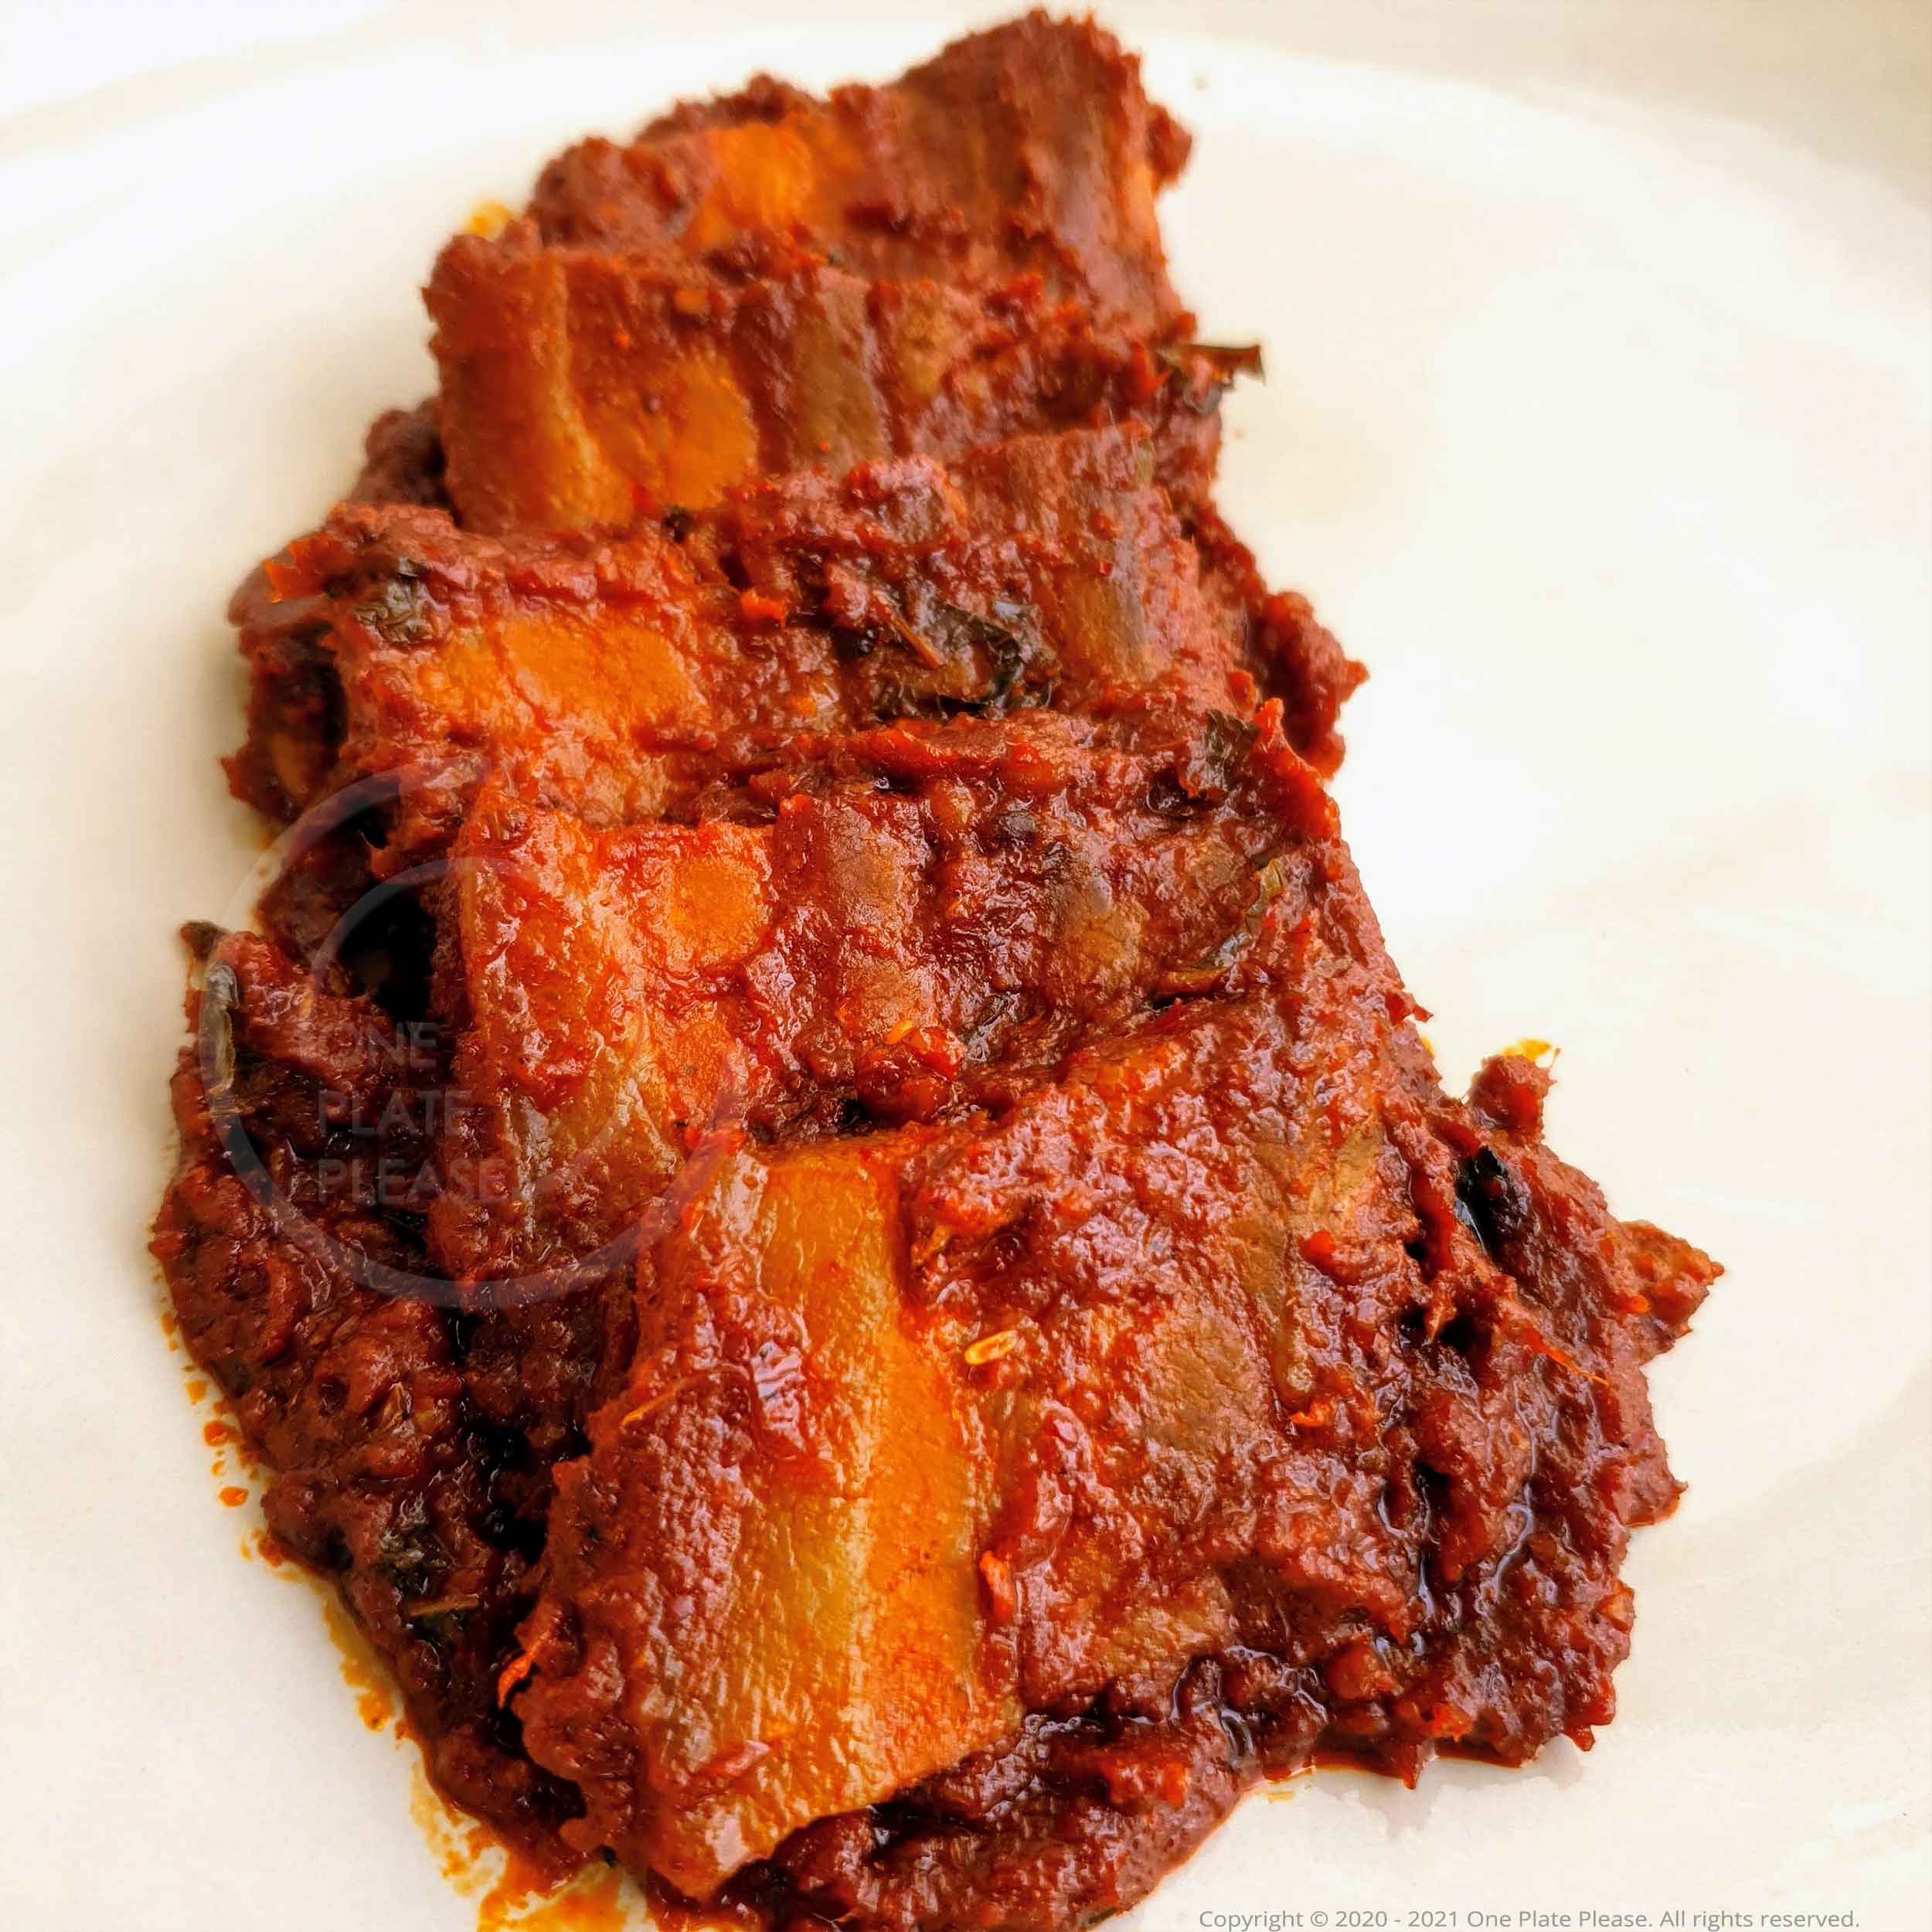 Mangalorean Chili, Salt and Vinegar Marinade + Fish Fry - My Food Story